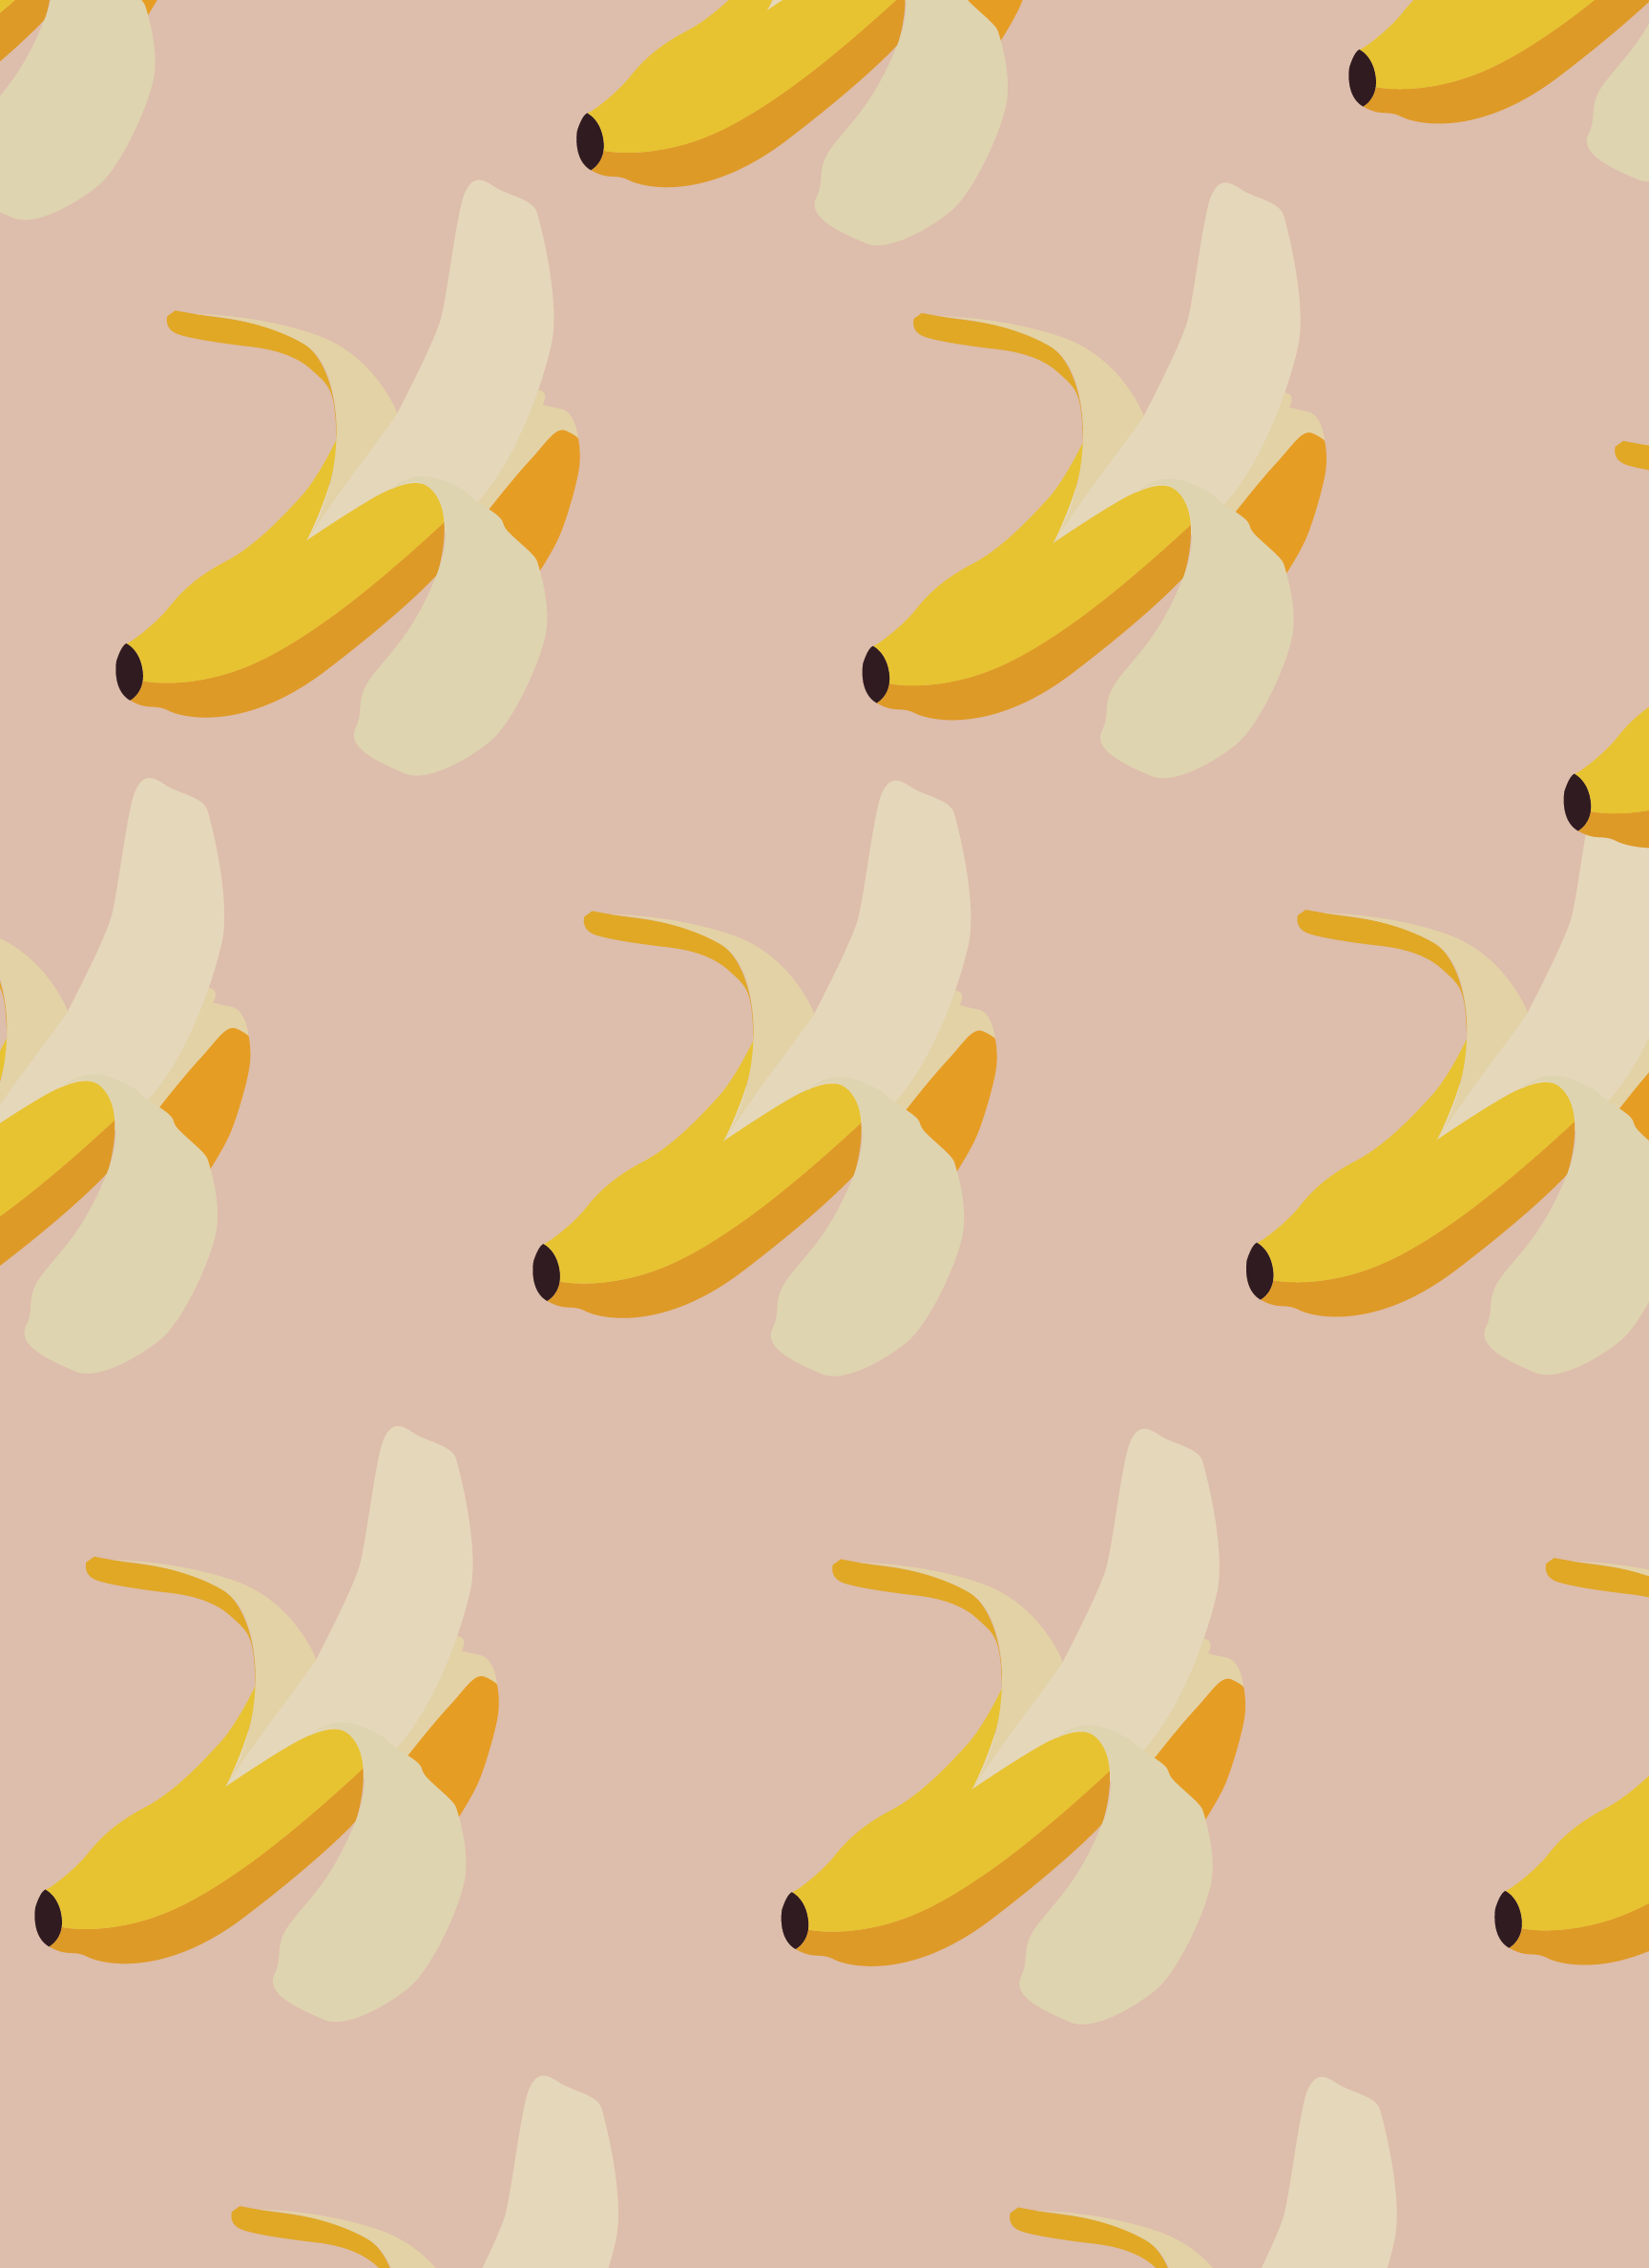 Cute Wallpaper Banana